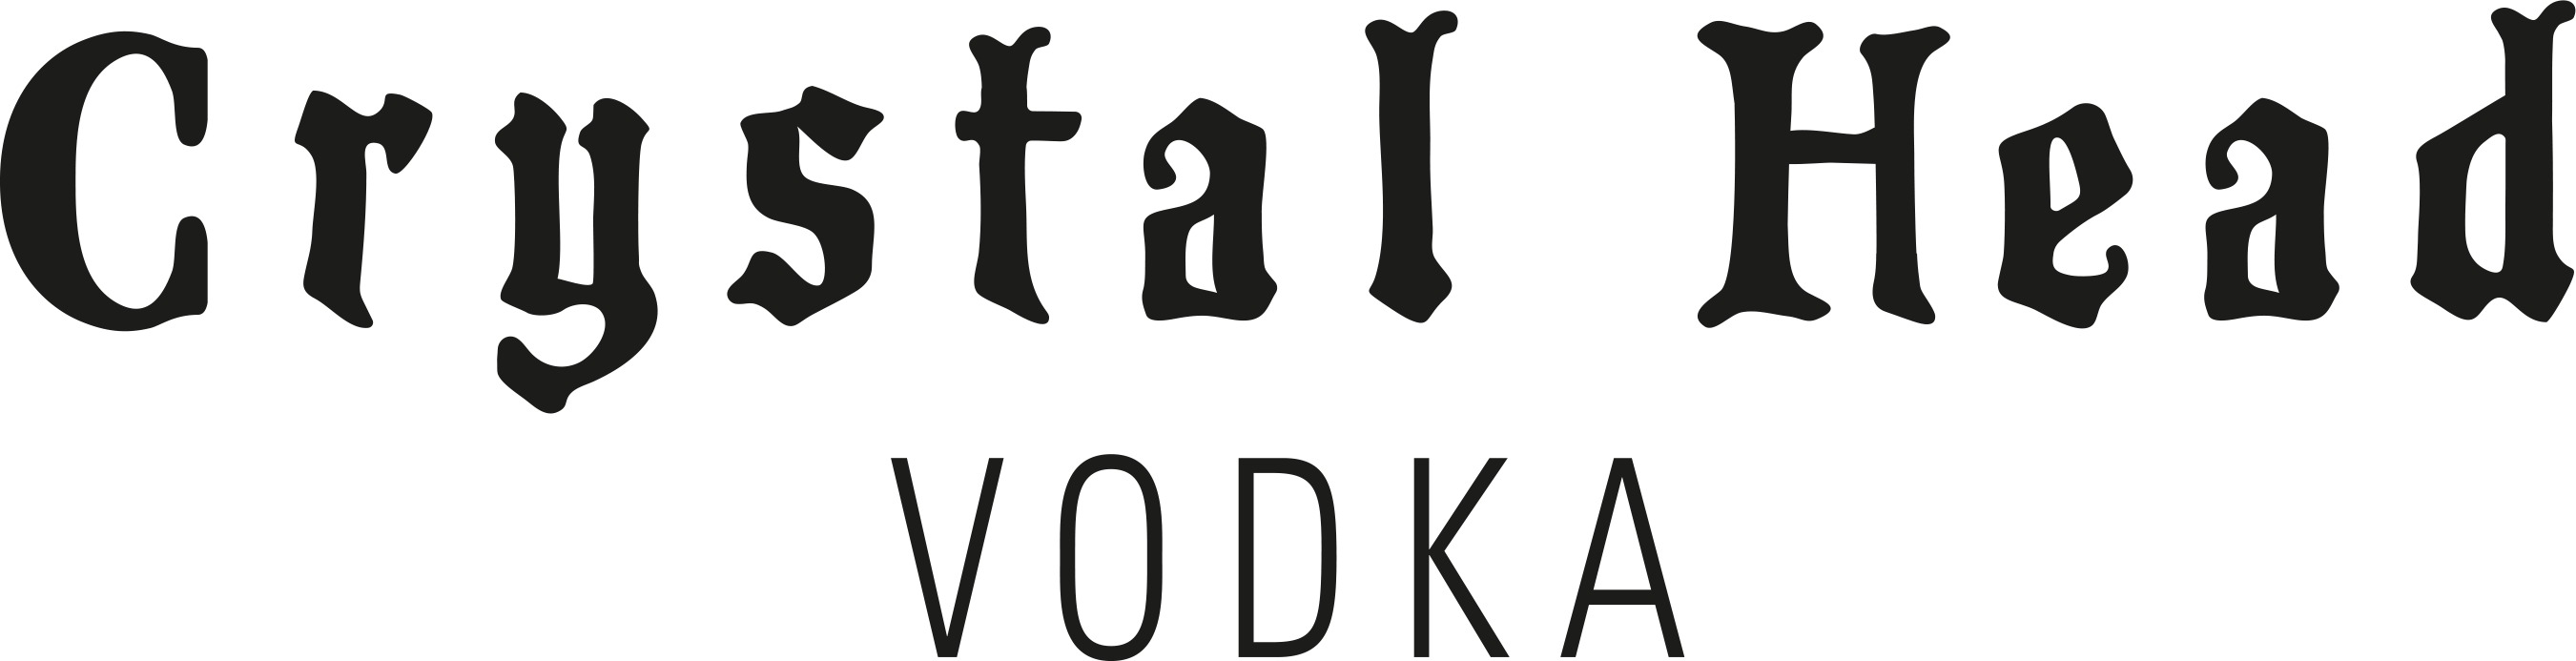 Crystal Head logo